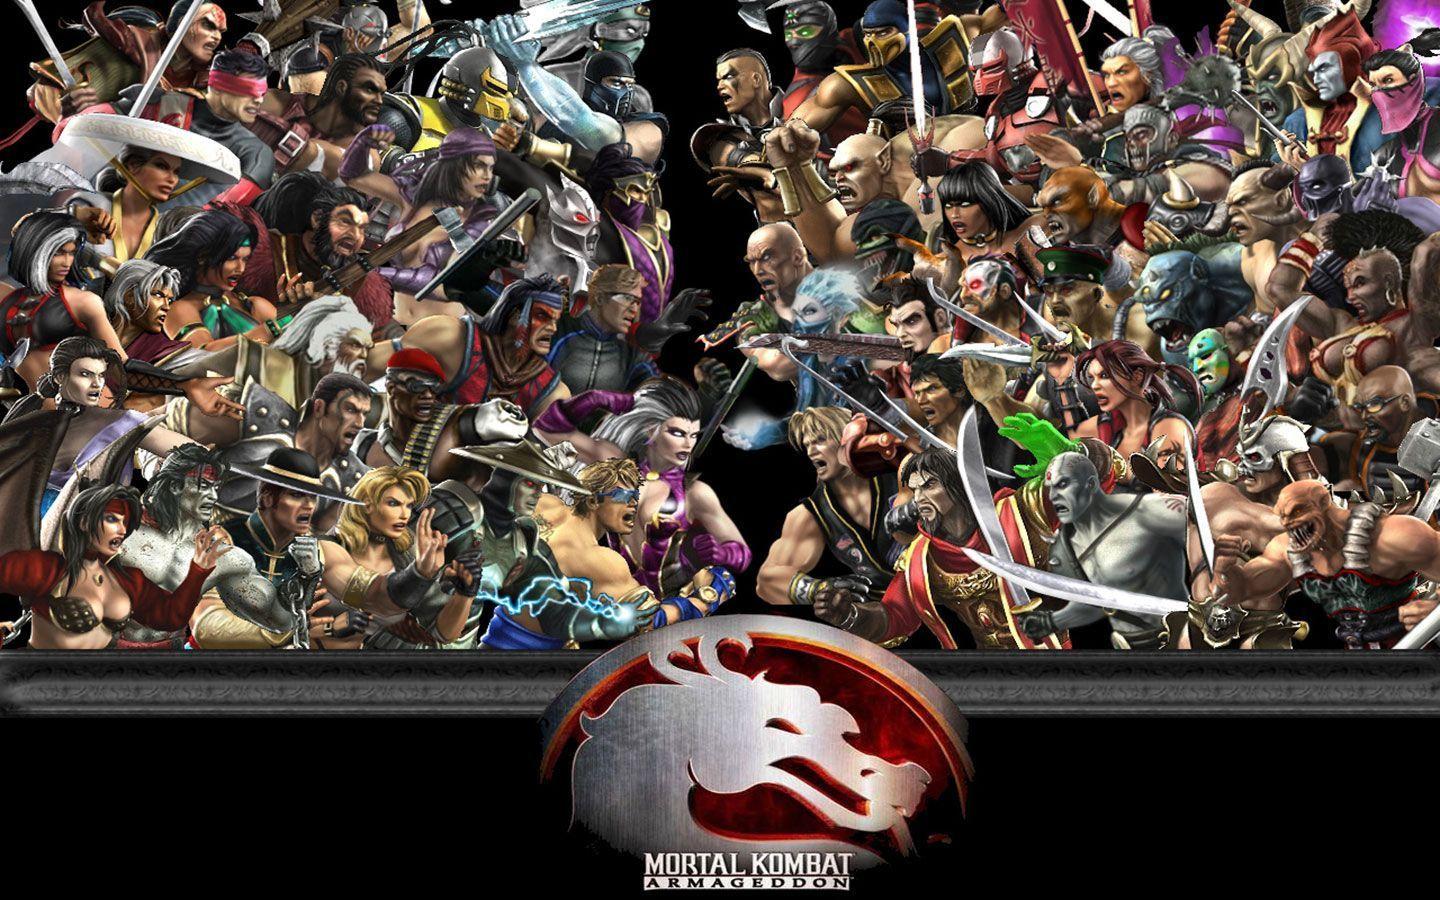 Mortal Kombat image MK wallpaper HD wallpaper and background